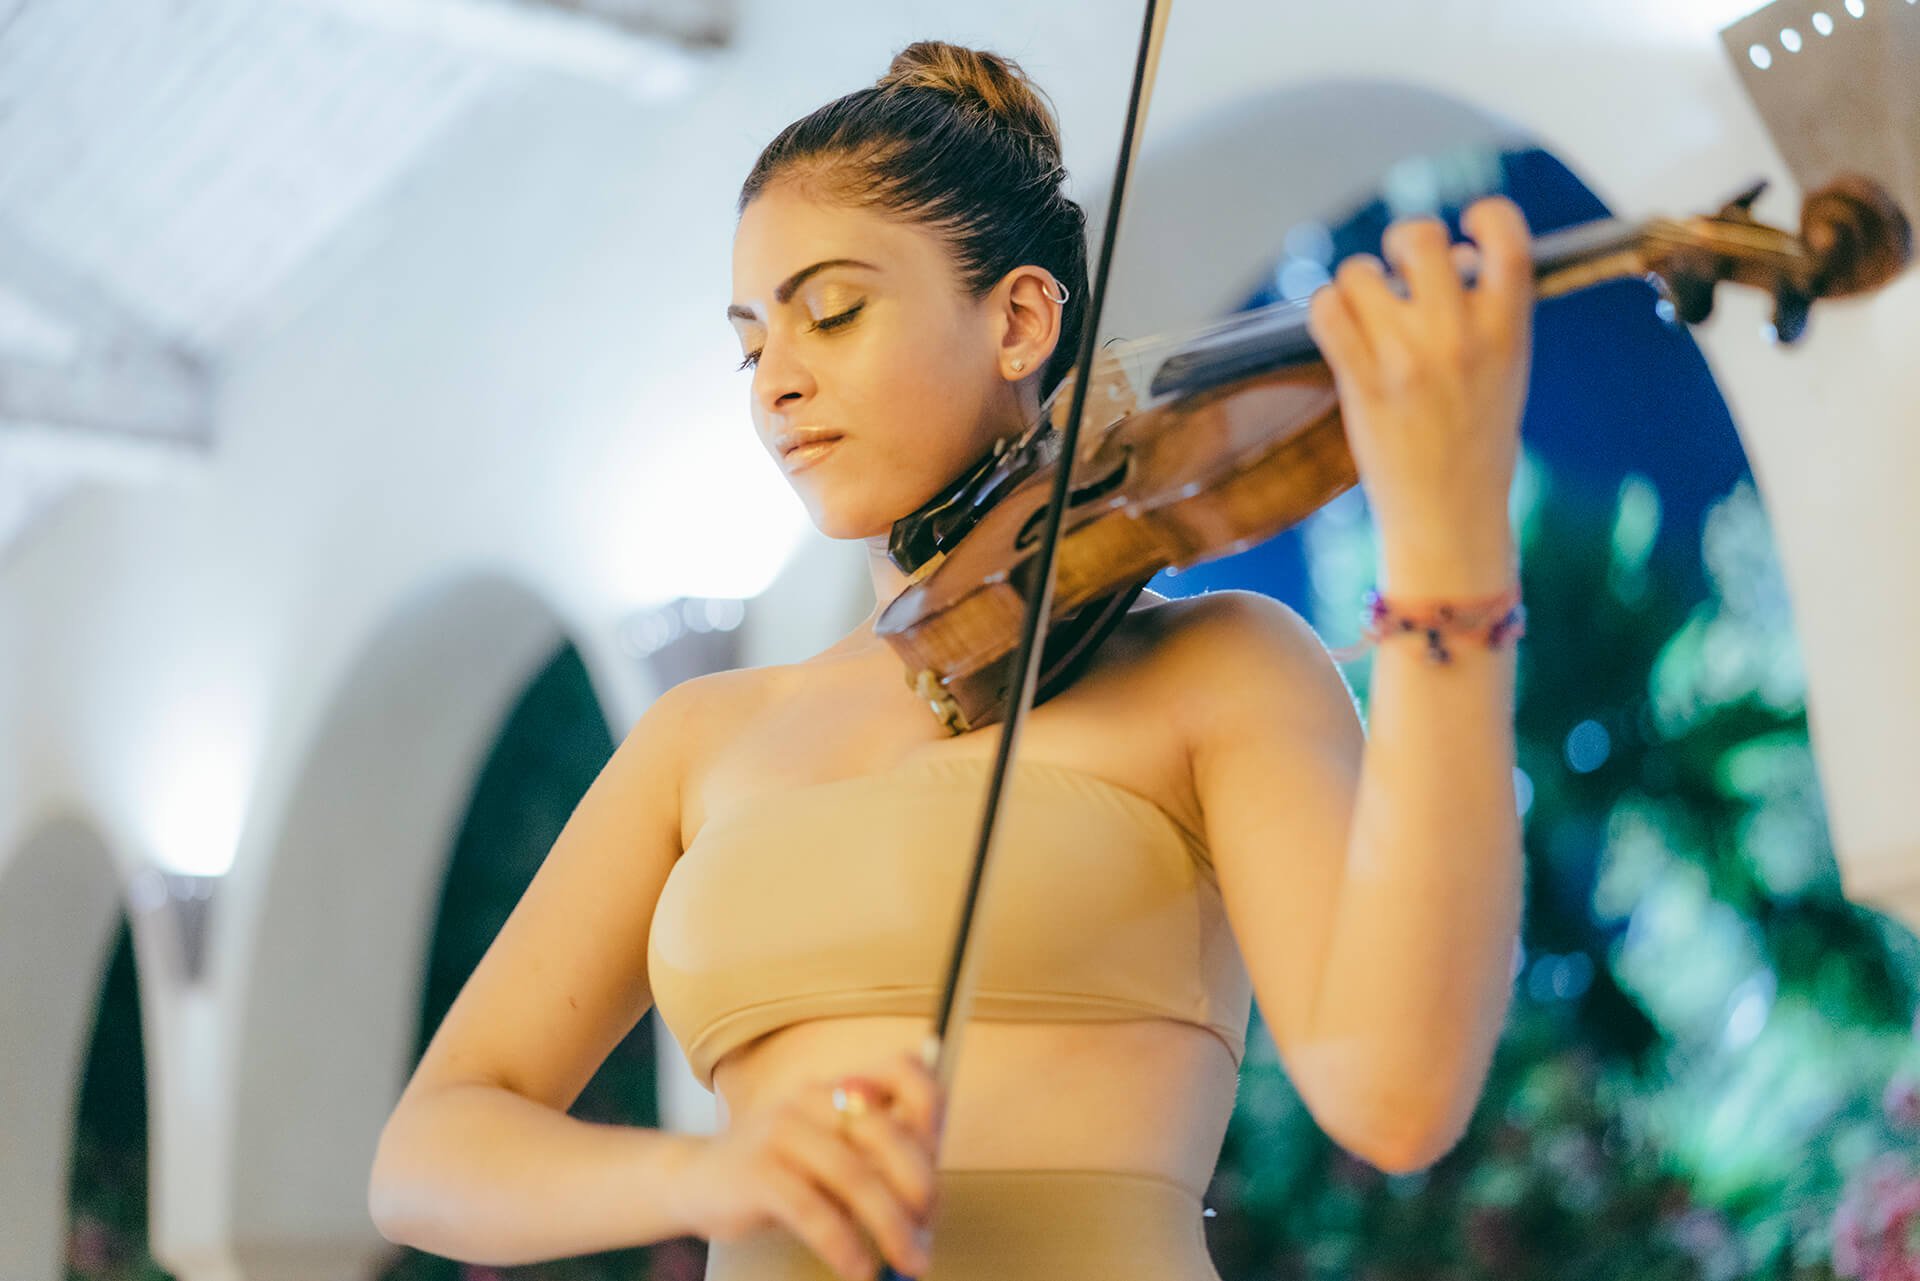 Yasmine Azaiez - Tunisian/British Violinist, Composer and Singer